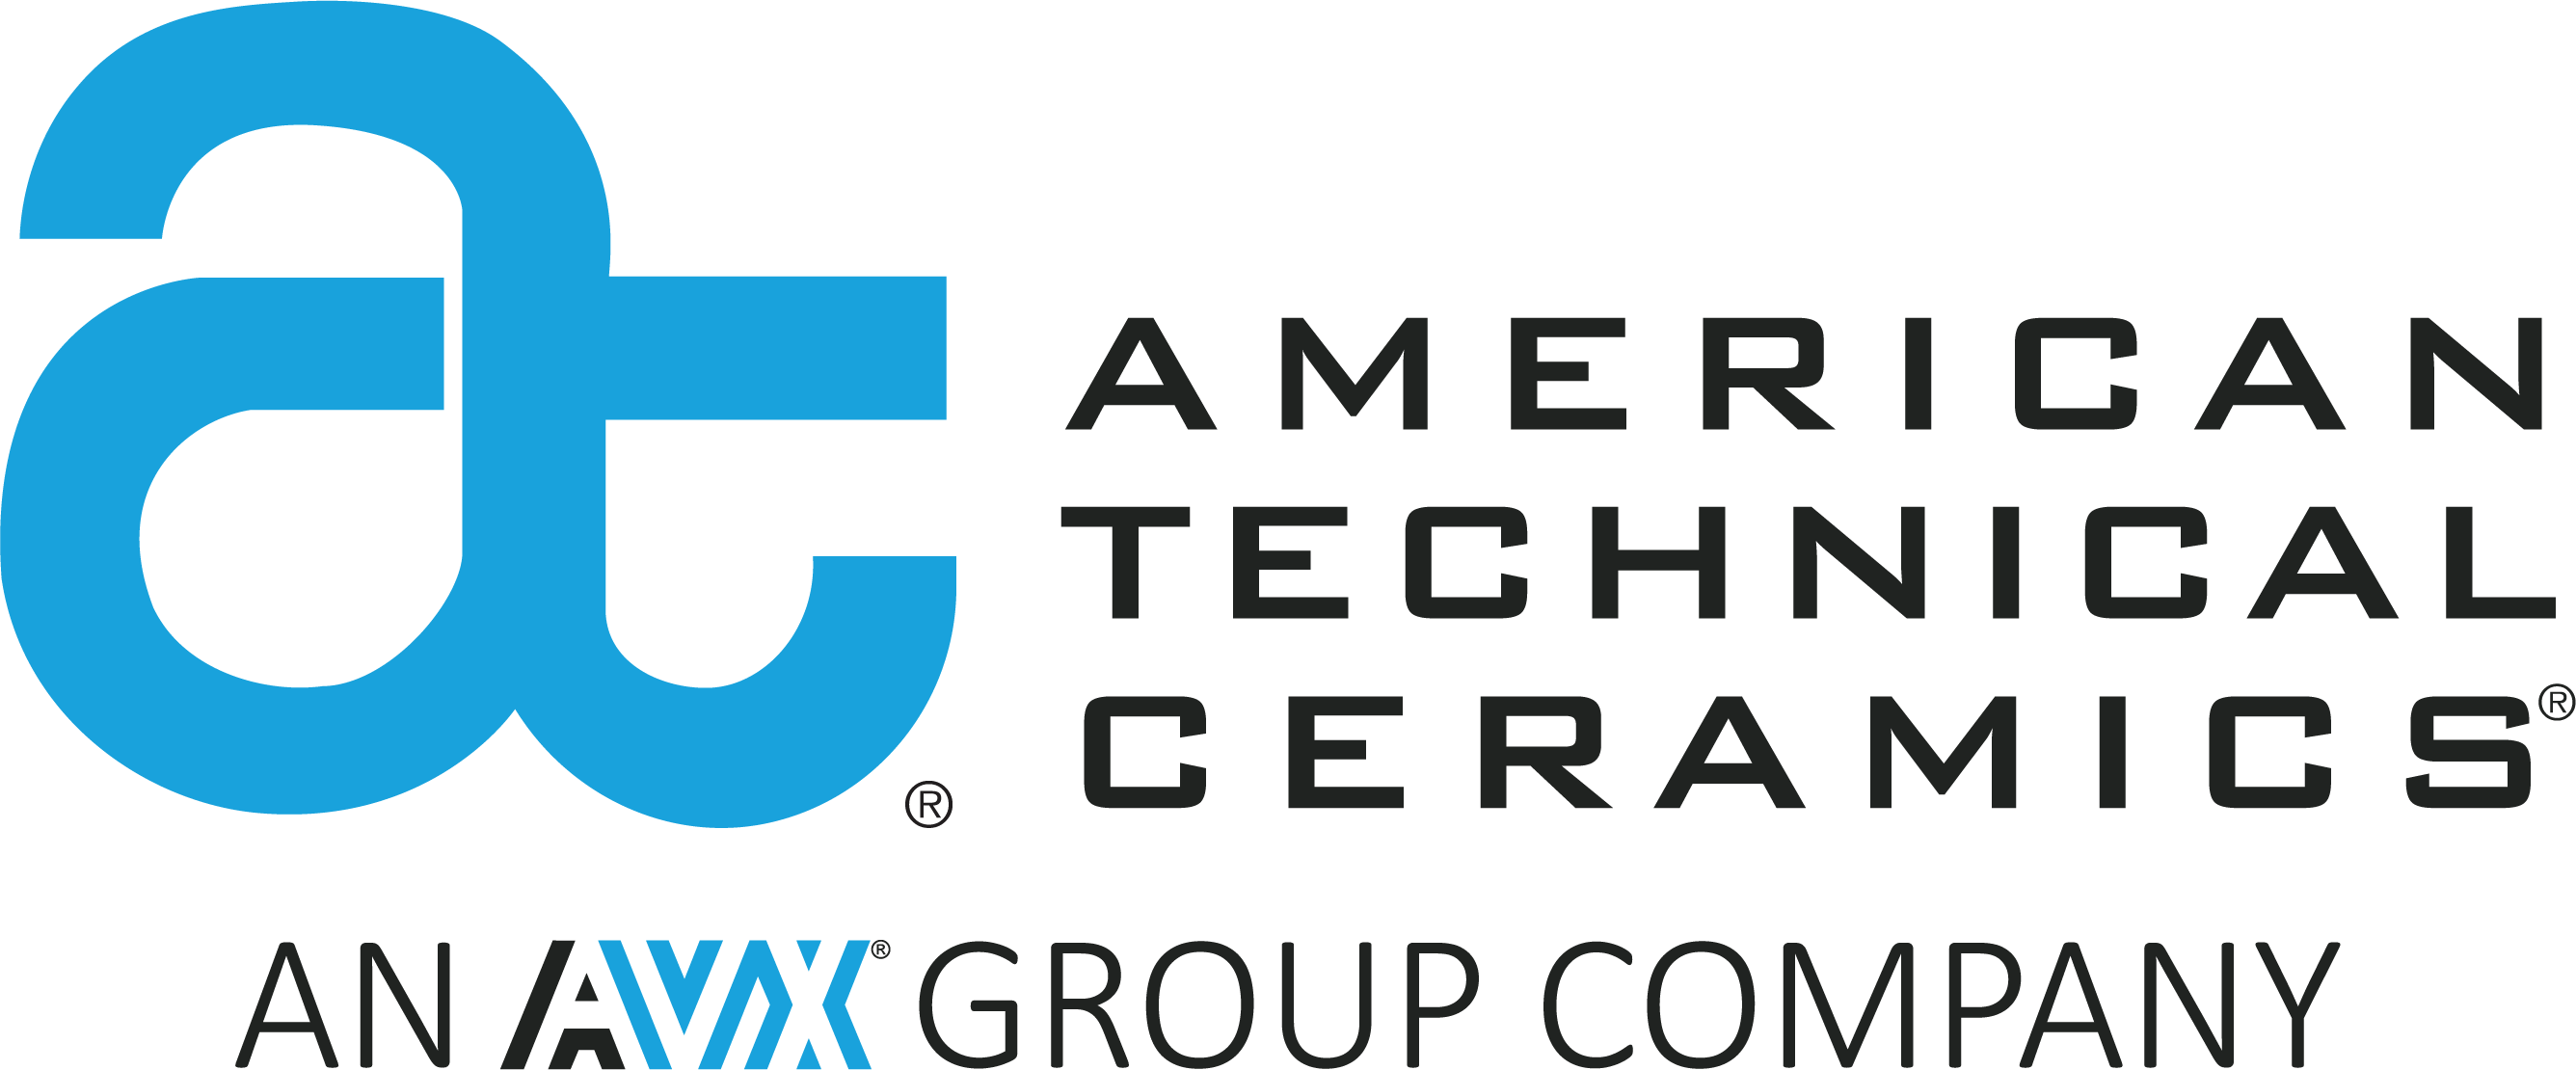 American Technical Ceramics LOGO